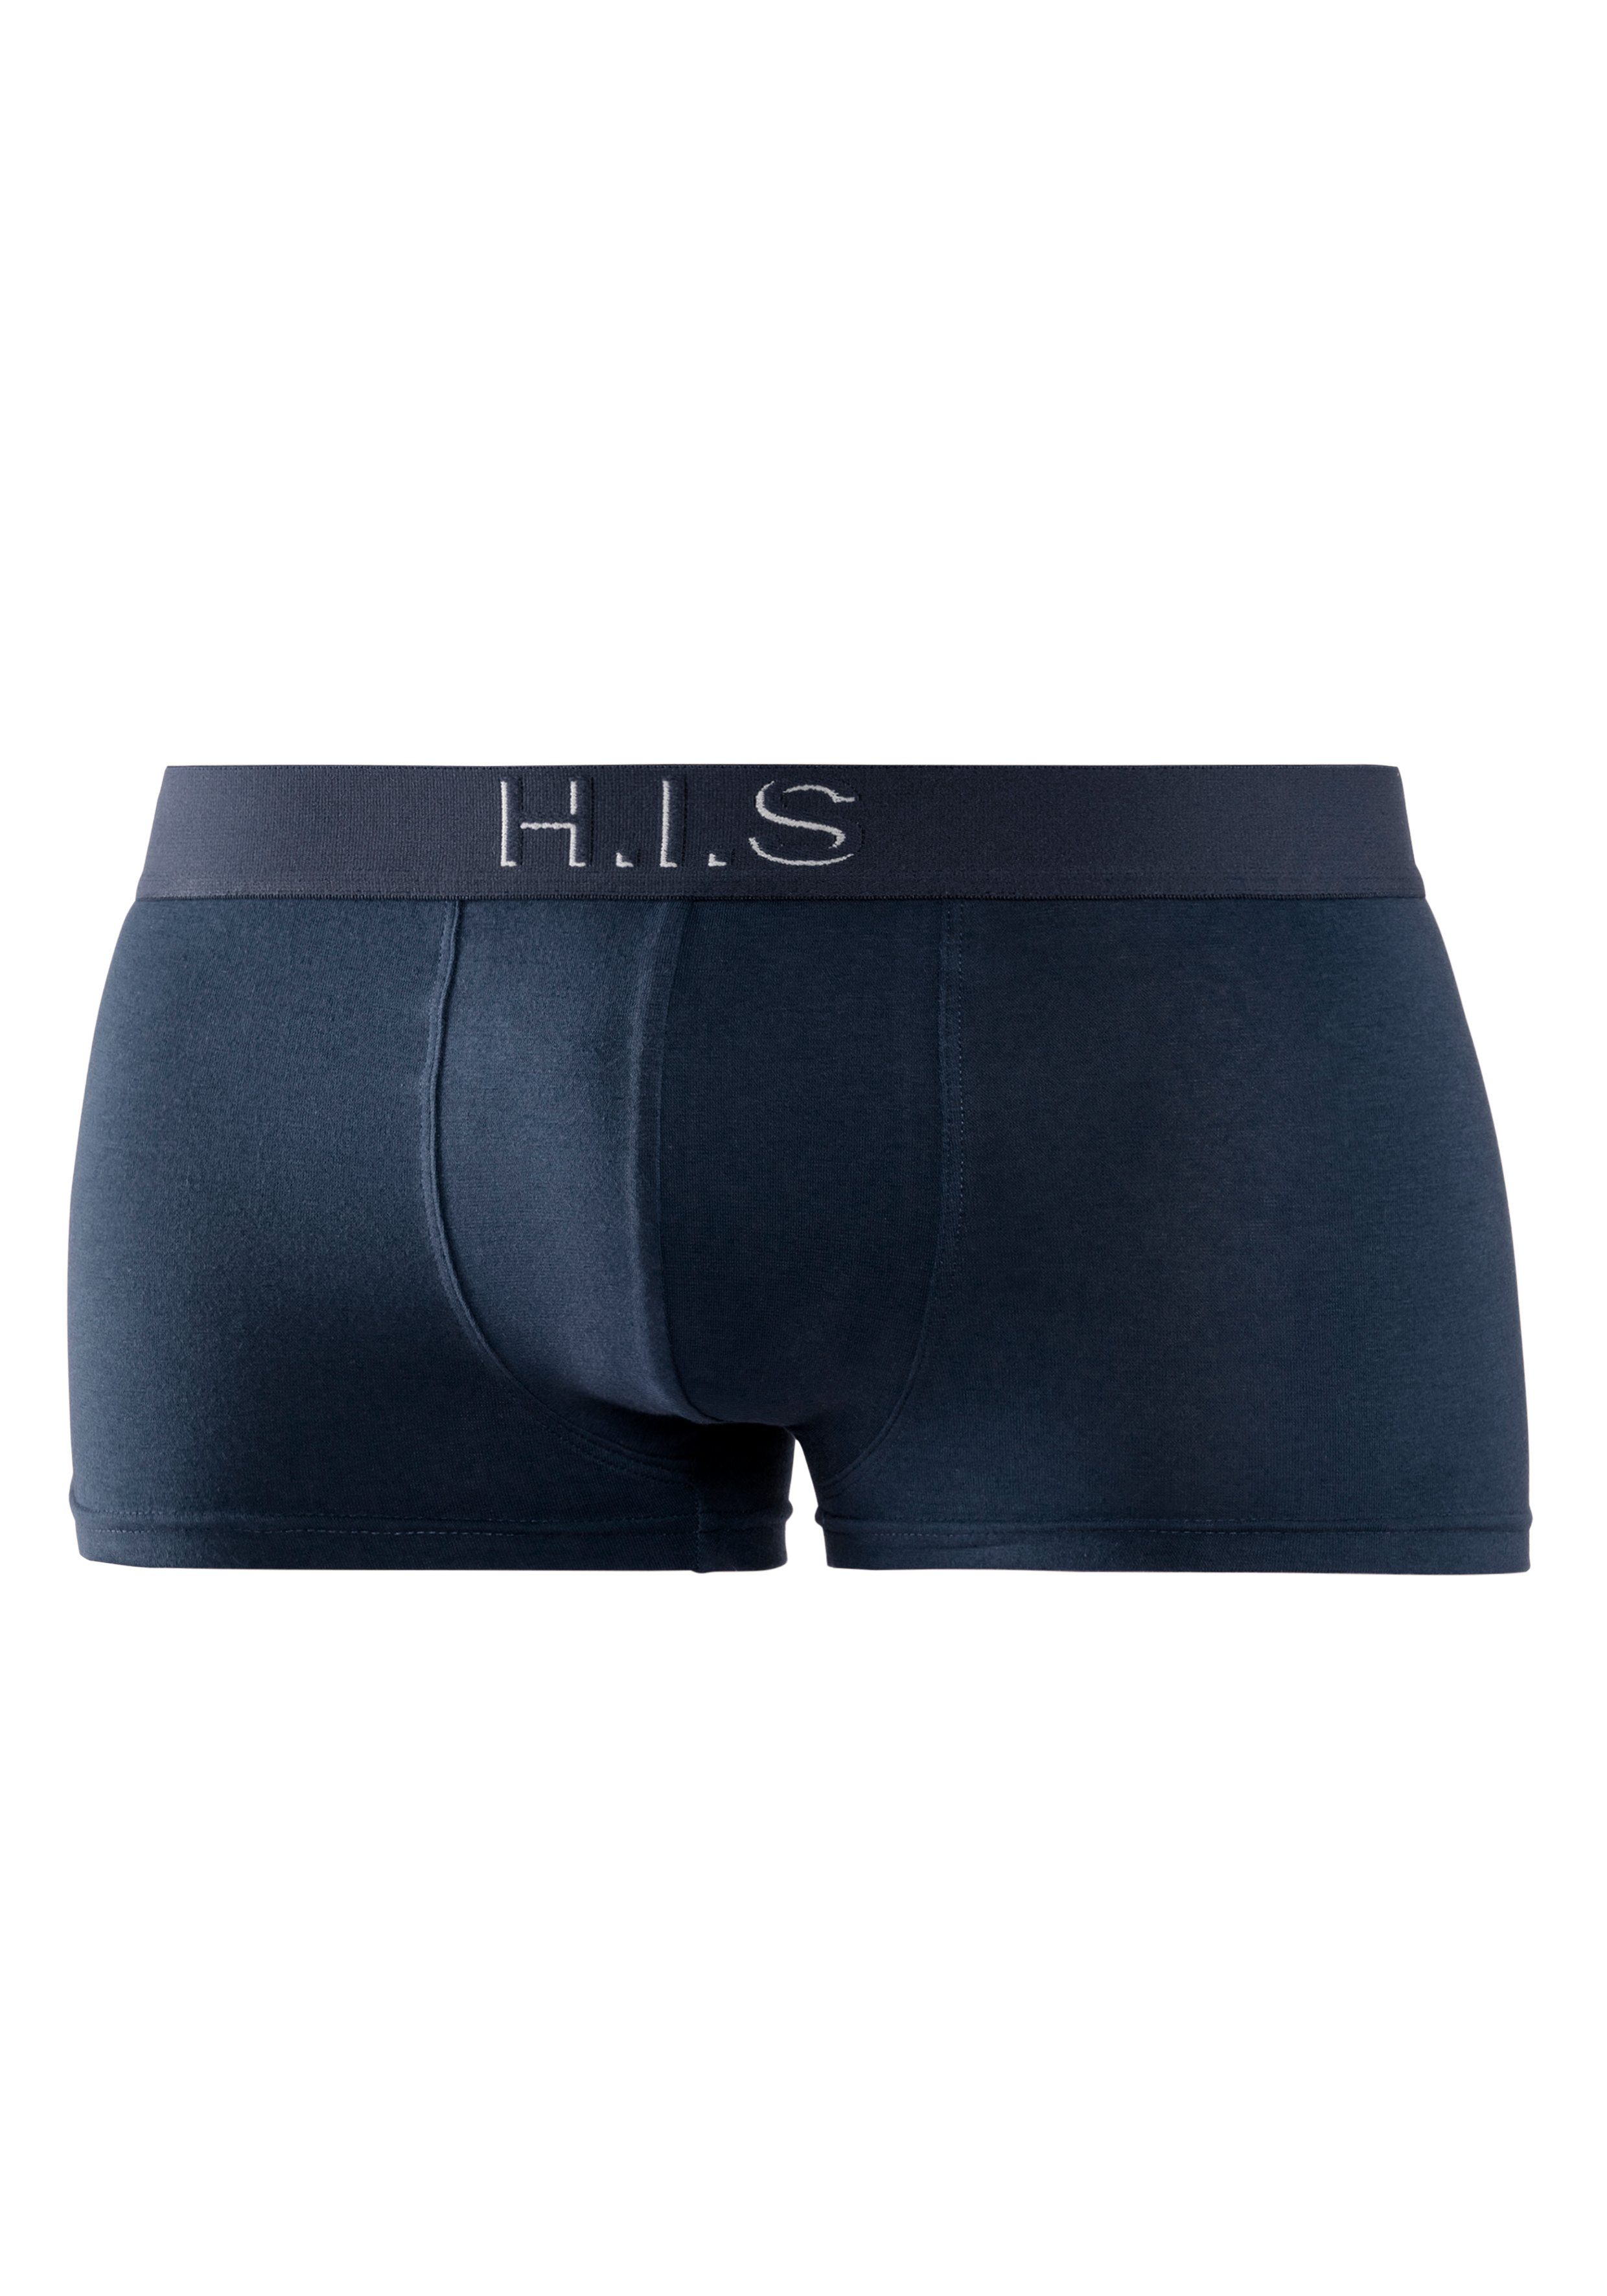 Logoschriftzug mit in schwarz, am 5-St) petrol, H.I.S Hipster-Form Boxershorts (Packung, Webbund mit navy bordeaux, 3D olivgrün, Effekt